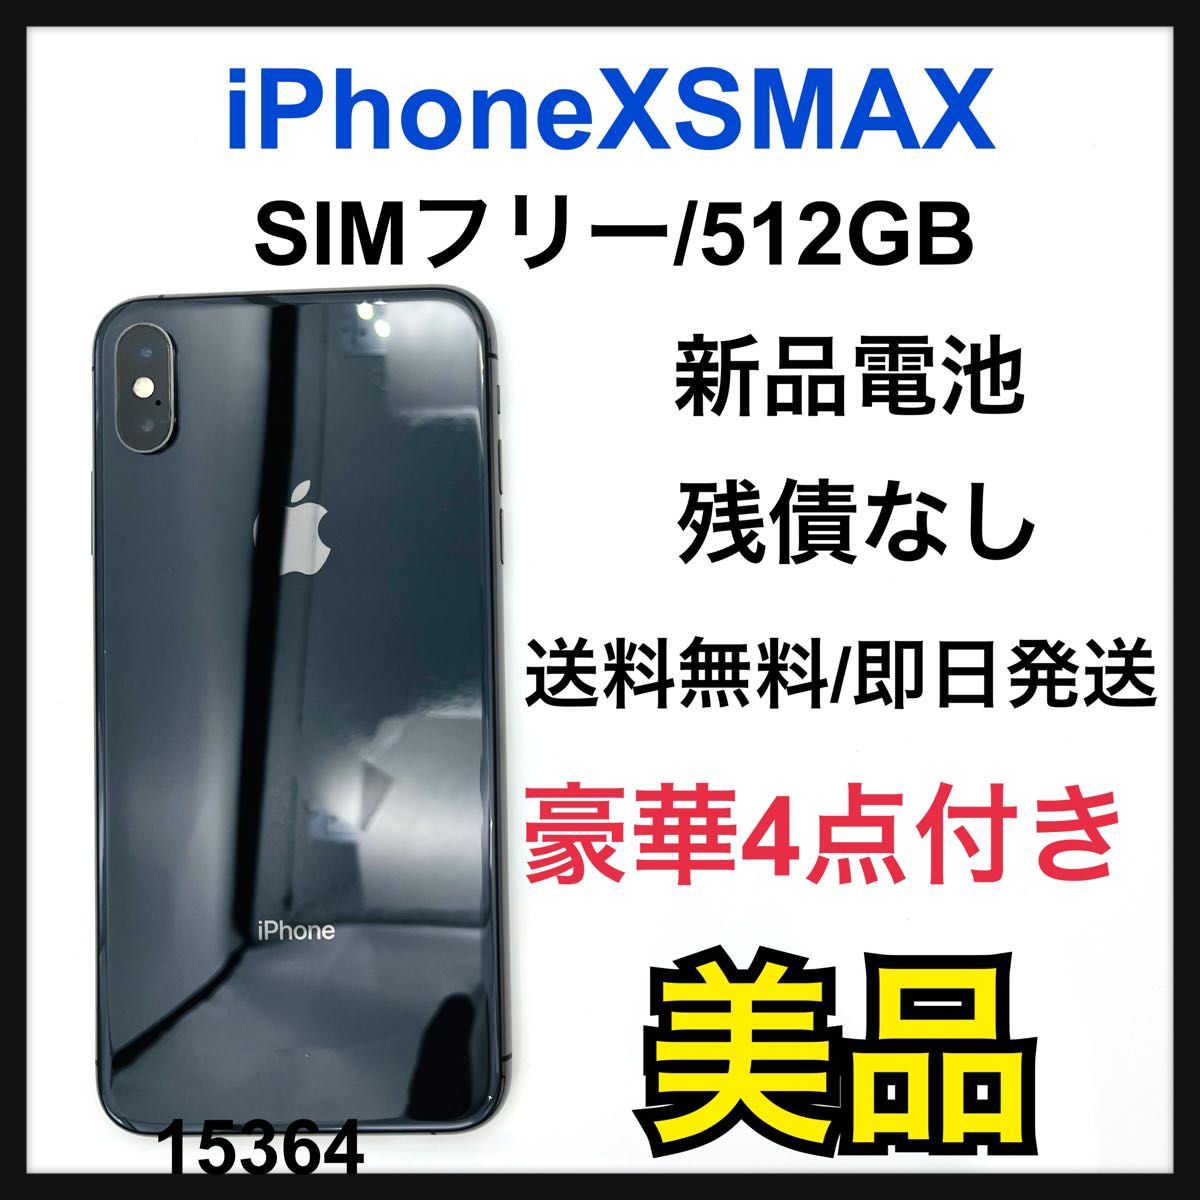 B iPhone Xs Max Space Gray 512 GB SIMフリー